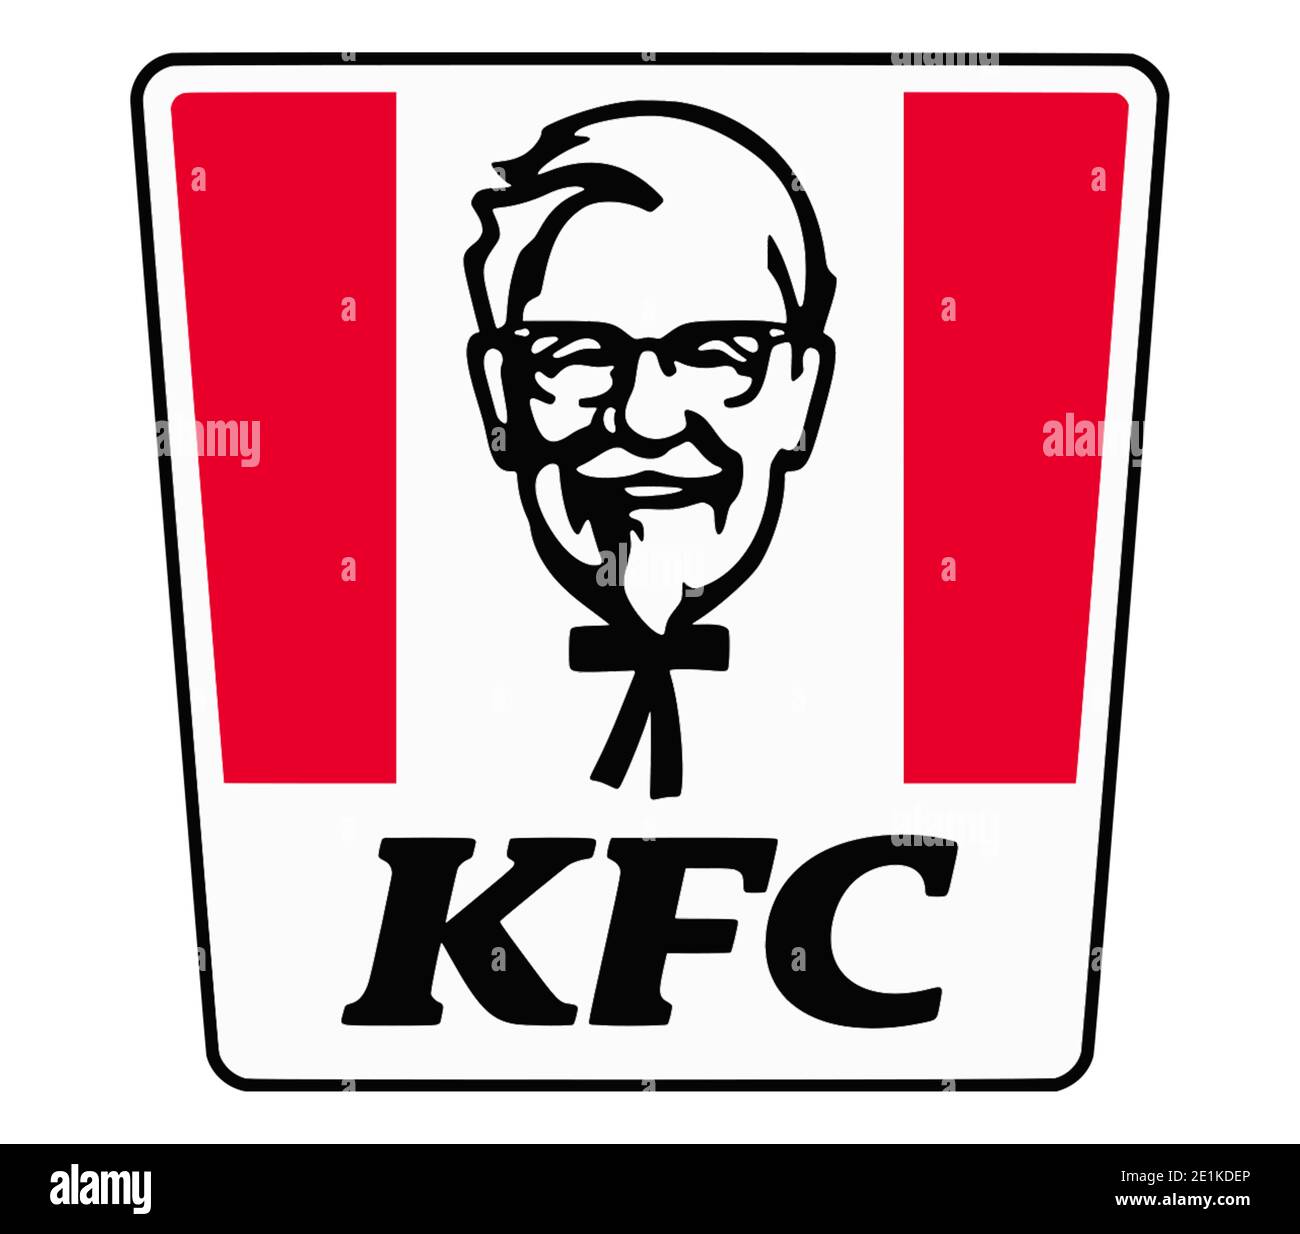 Kentucky Fried Chicken restaurant logo Stock Photo